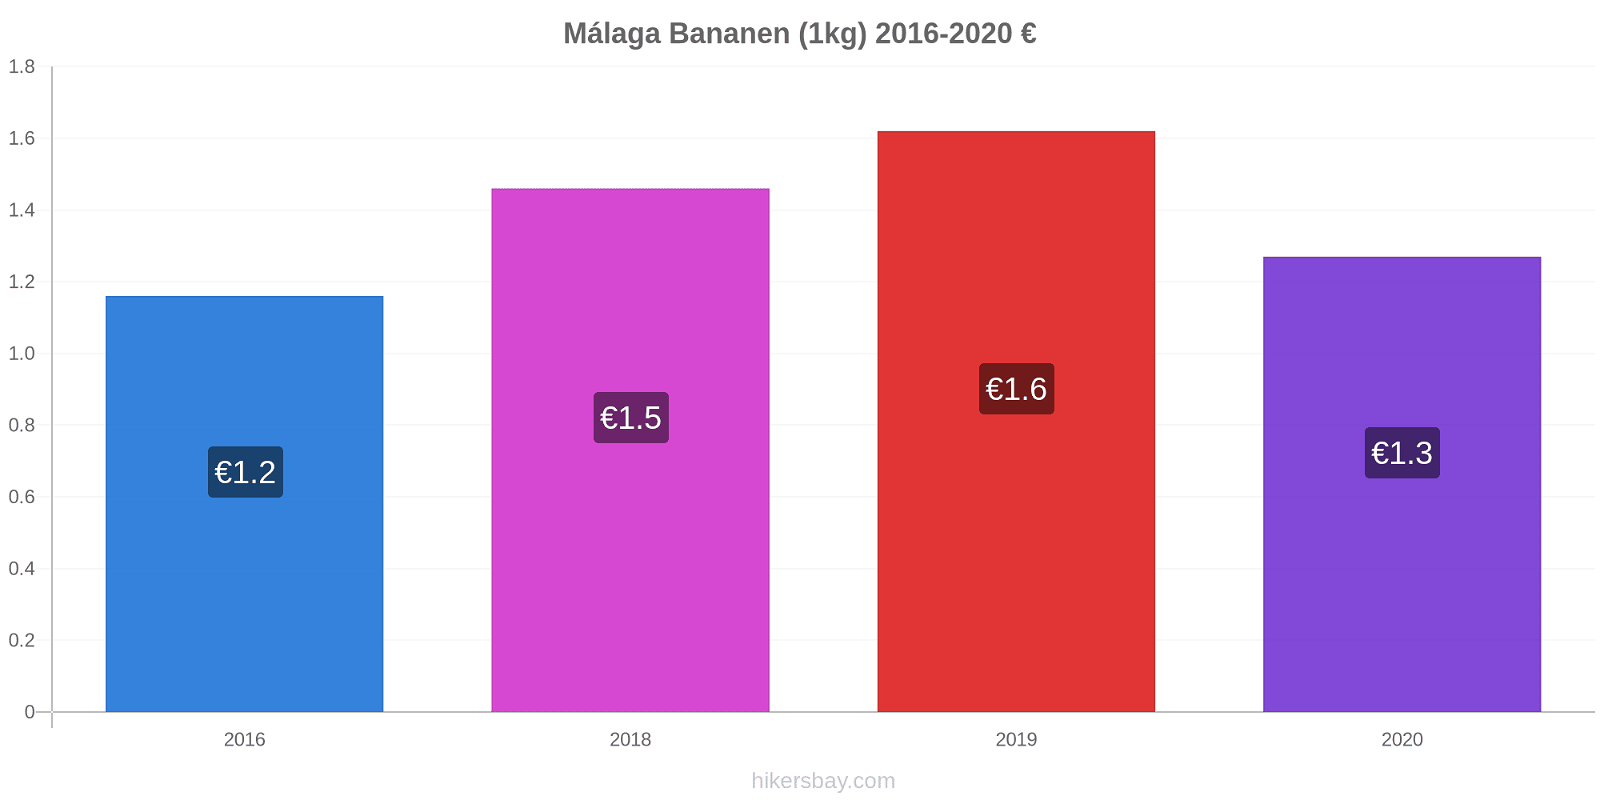 Málaga prijswijzigingen Banaan (1kg) hikersbay.com